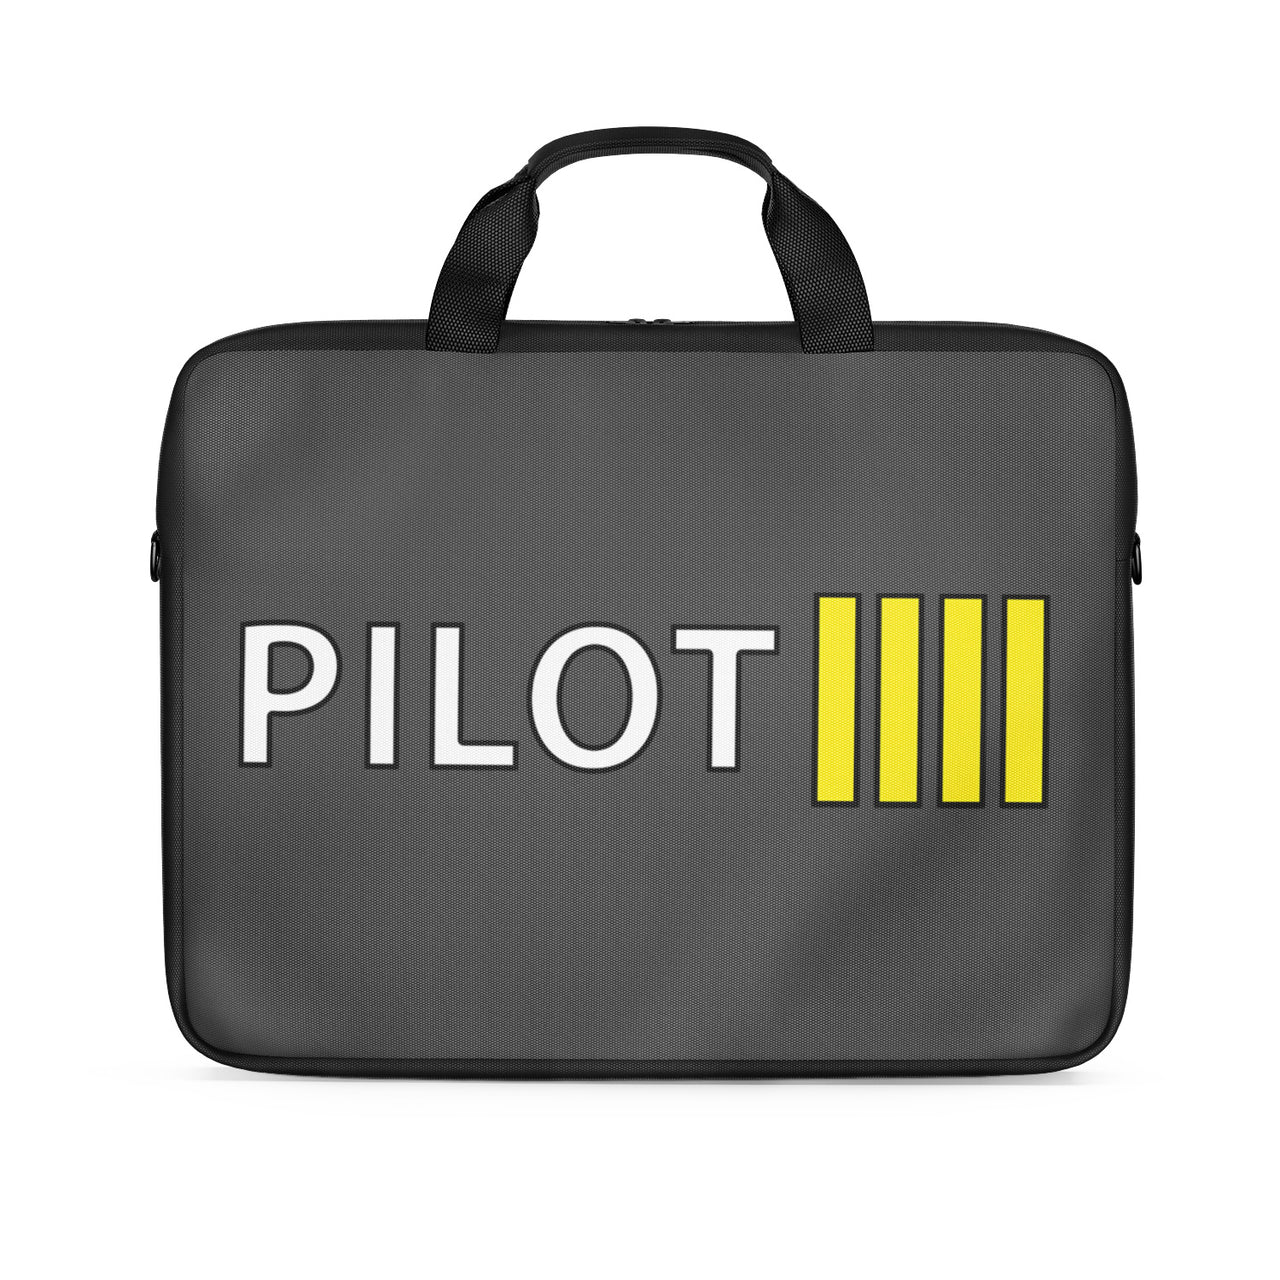 Pilot & Stripes (4 Lines) Designed Laptop & Tablet Bags